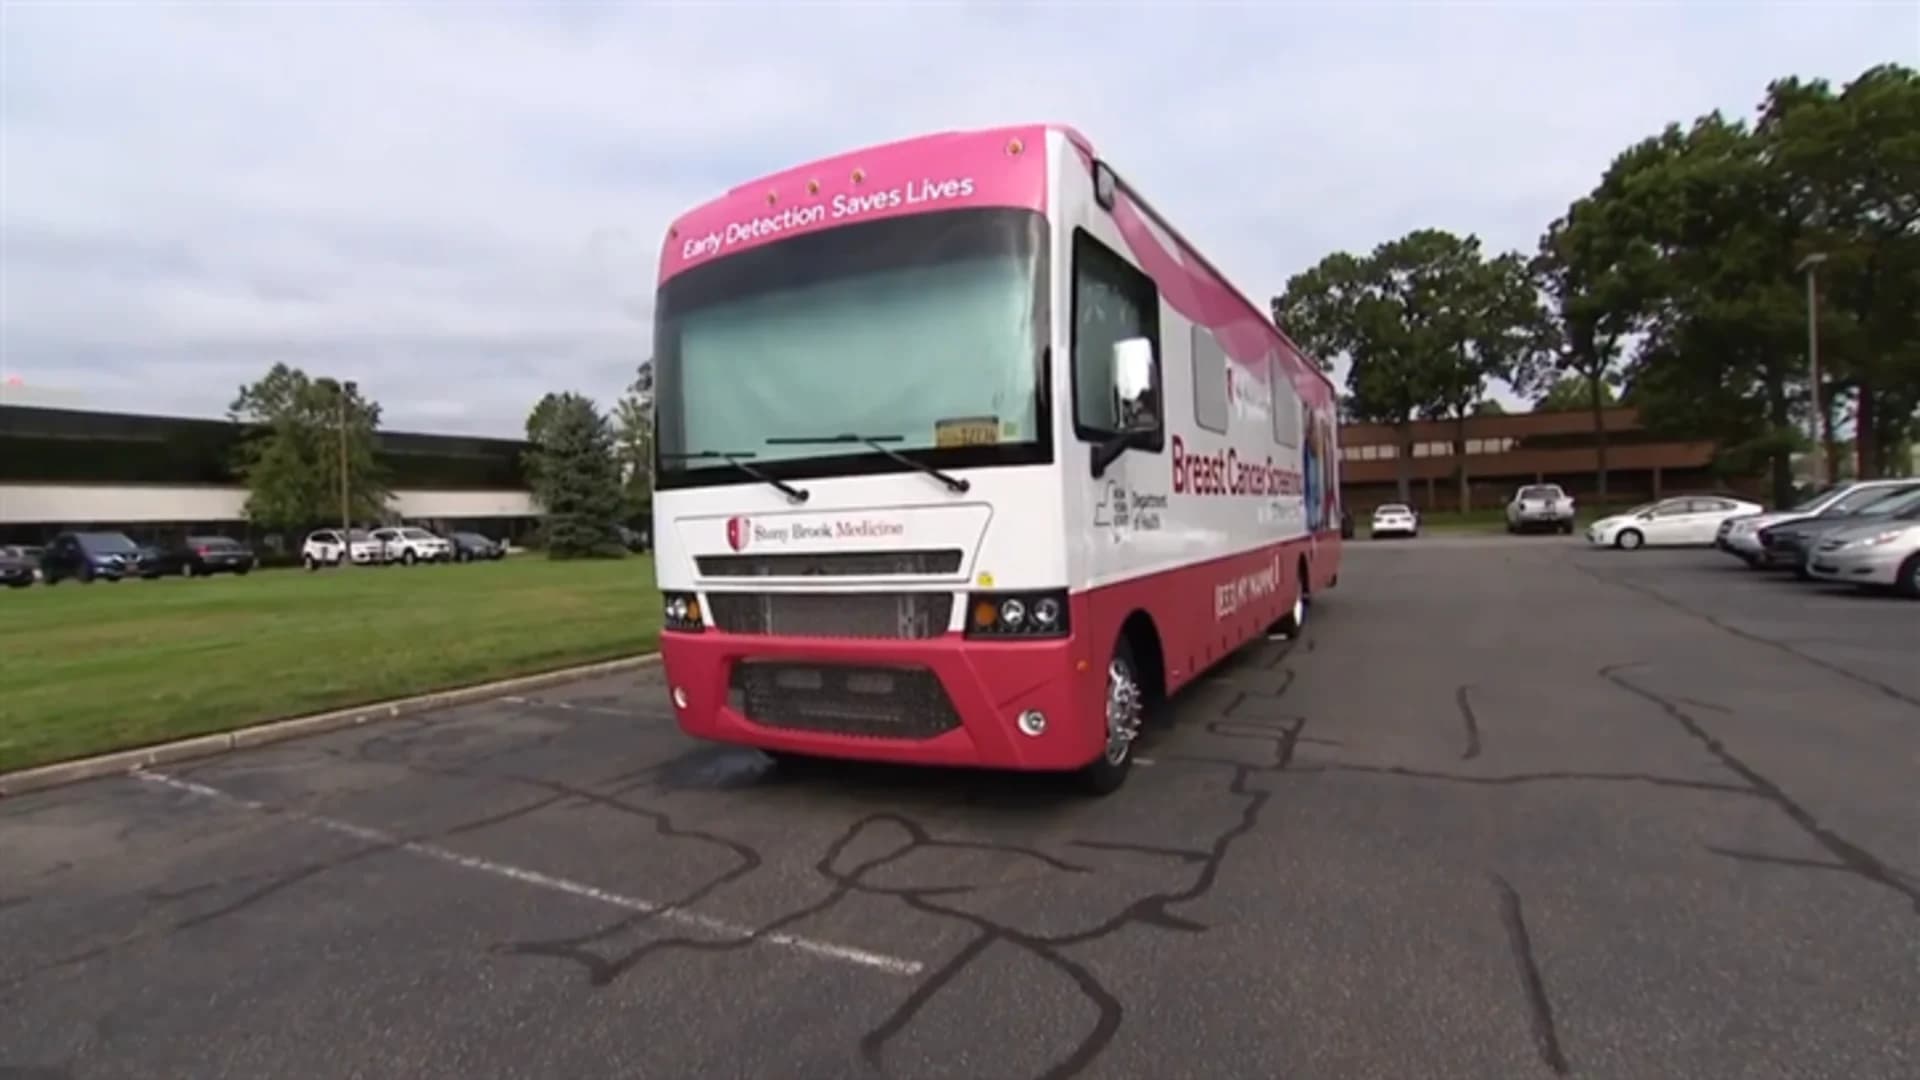 Mobile Mammography Van provides easy access to mammograms across LI